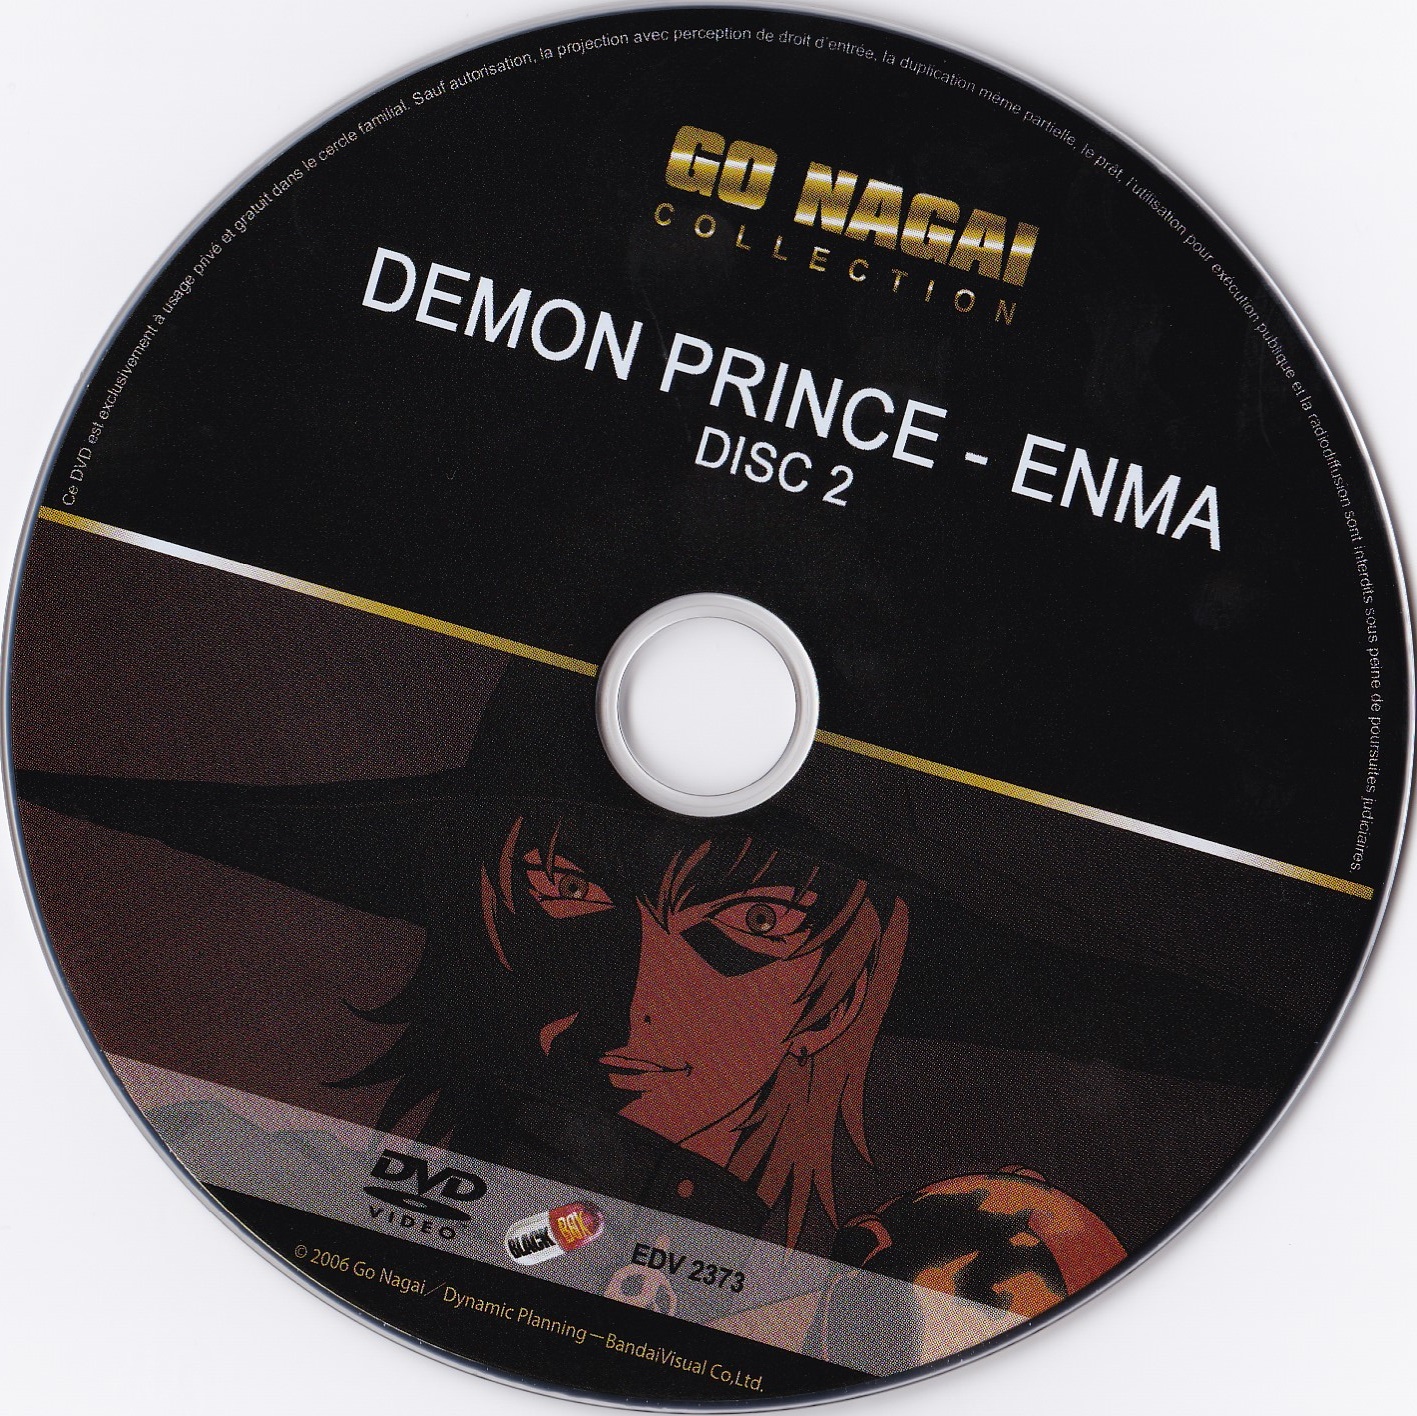 Demon Prince - Enma DISC 2